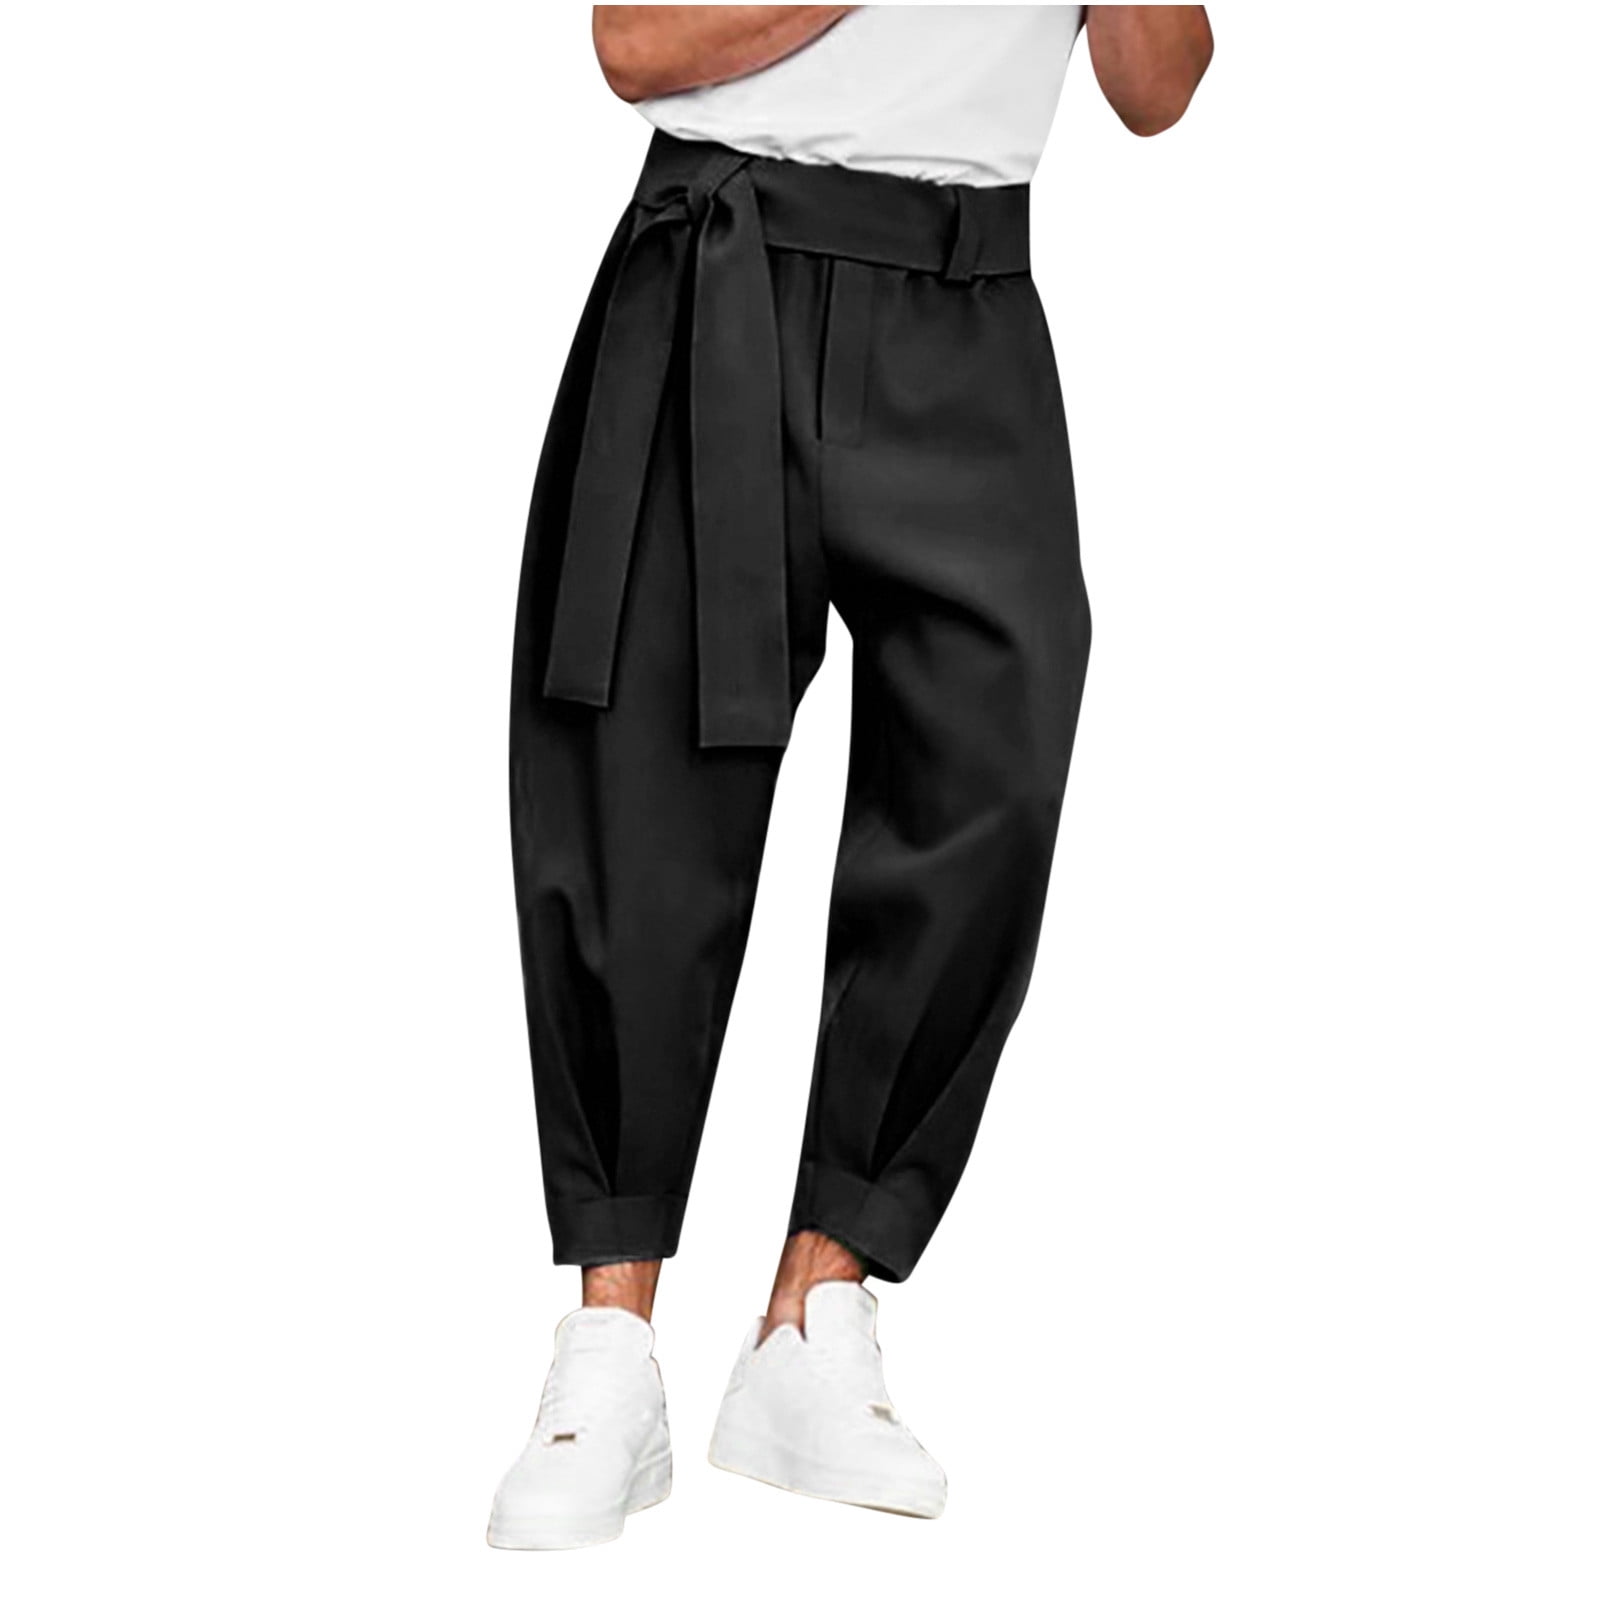 Buy A&J DESIGN Toddler & Baby Boys Gentleman Outfit 3pcs Tuxedo Formal Suit  Shirt & Pants & Vest, Dark Gray Suit, 12-18 Months at Amazon.in